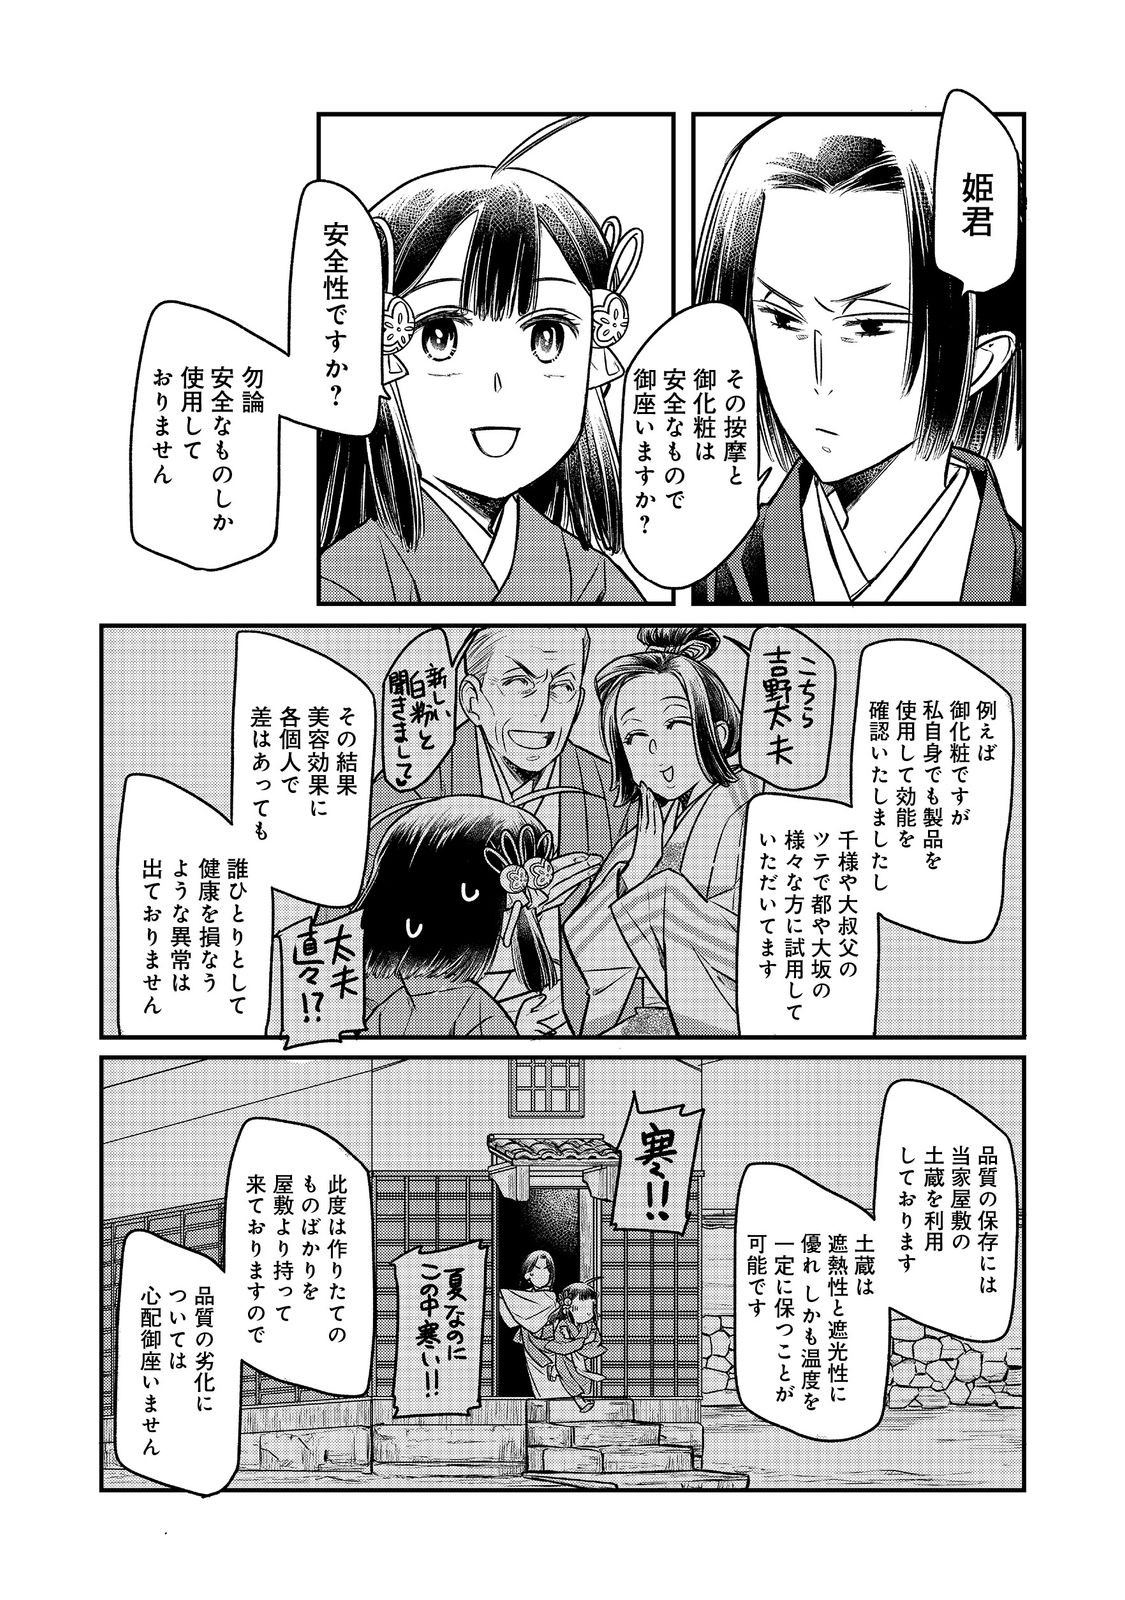 Kitanomandokoro-sama no Okeshougakari - Chapter 9.2 - Page 7